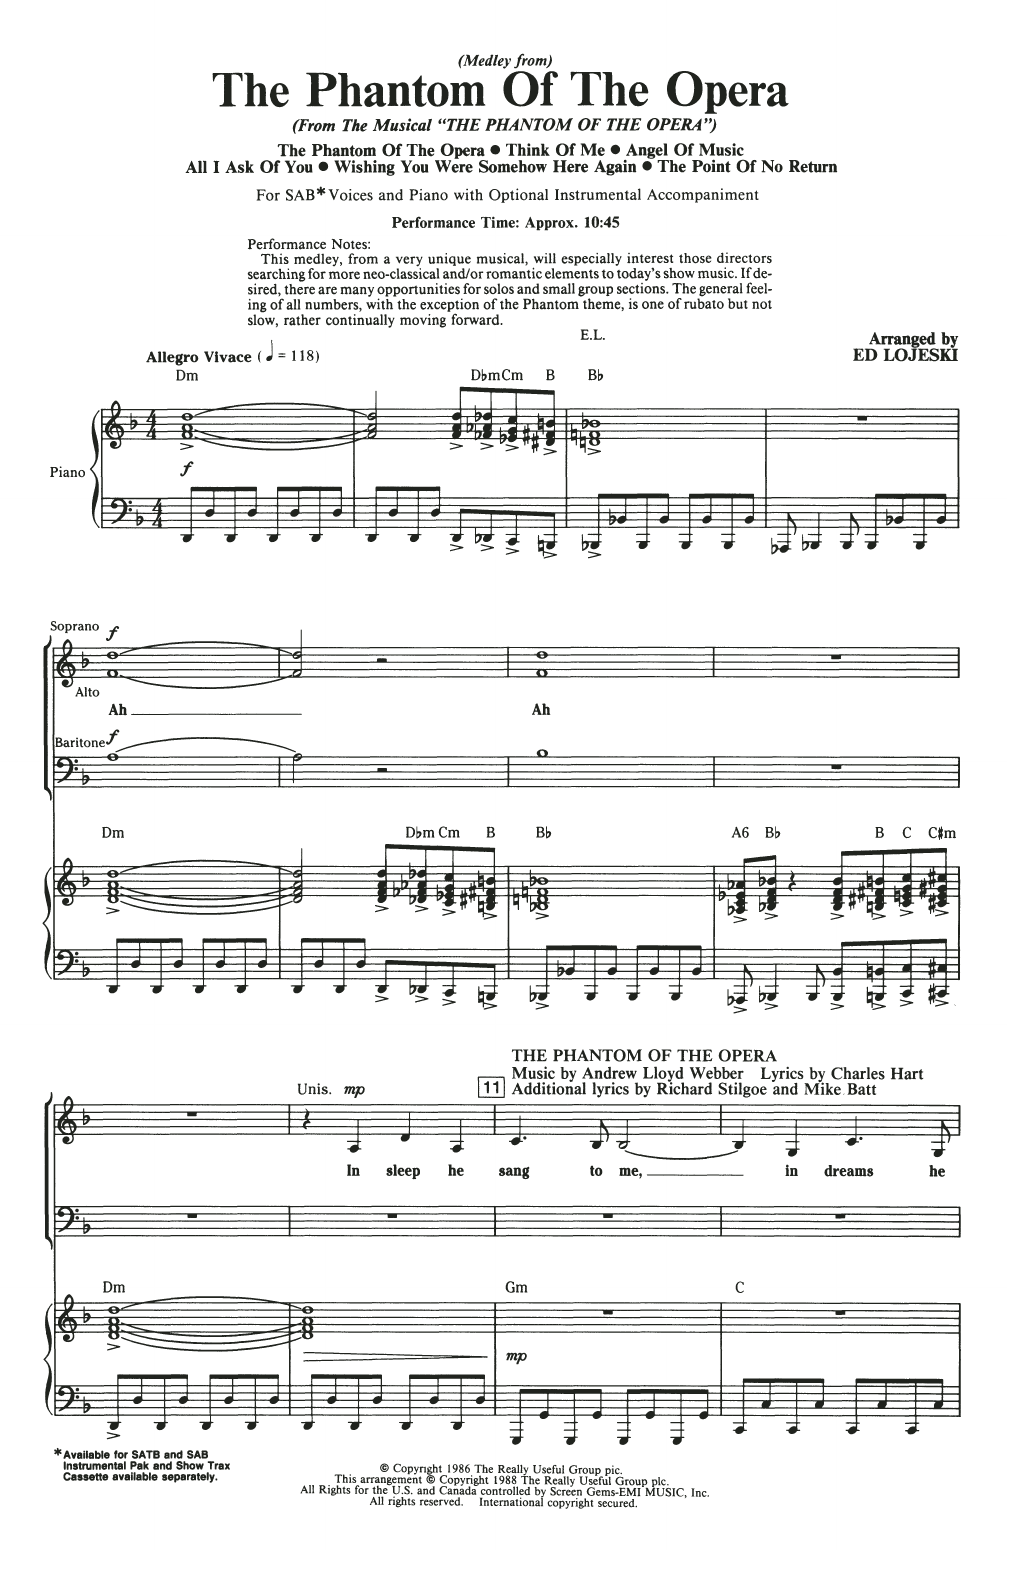 Andrew Lloyd Webber The Phantom Of The Opera (Medley) (arr. Ed Lojeski) Sheet Music Notes & Chords for SAB Choir - Download or Print PDF